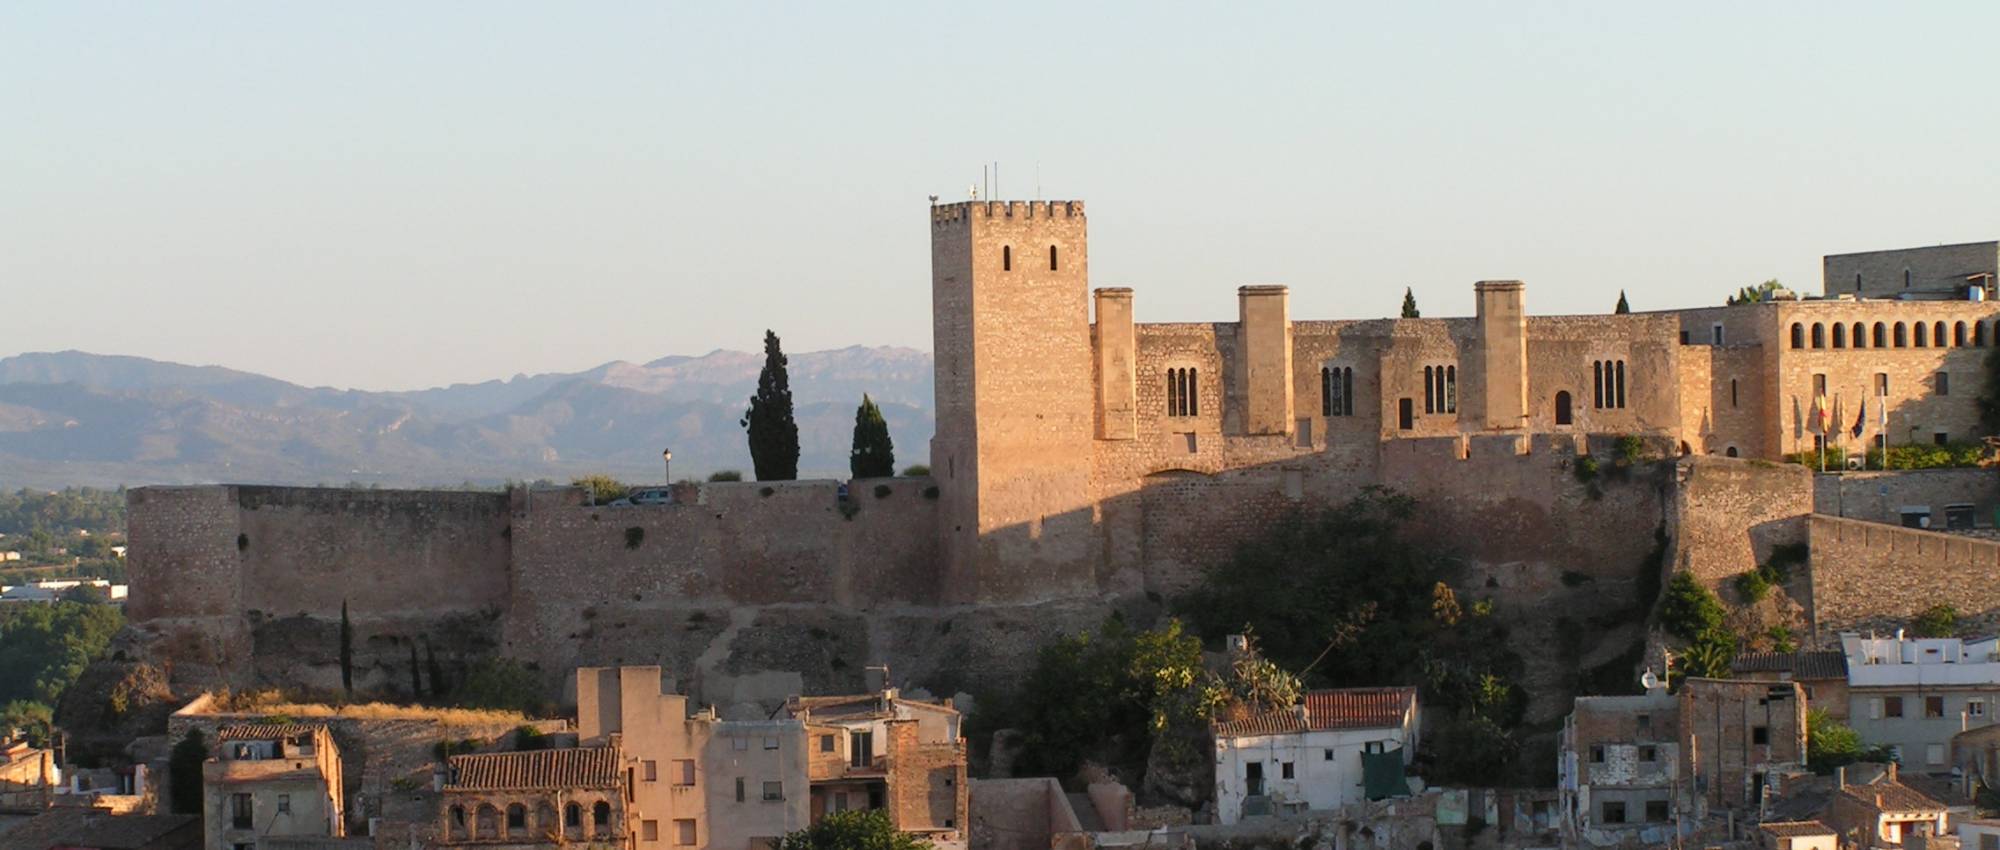 Vista general del castillo de La Suda, en Tortosa. Manel Zaera / Wikimedia Commons. CC BY-SA 2.0